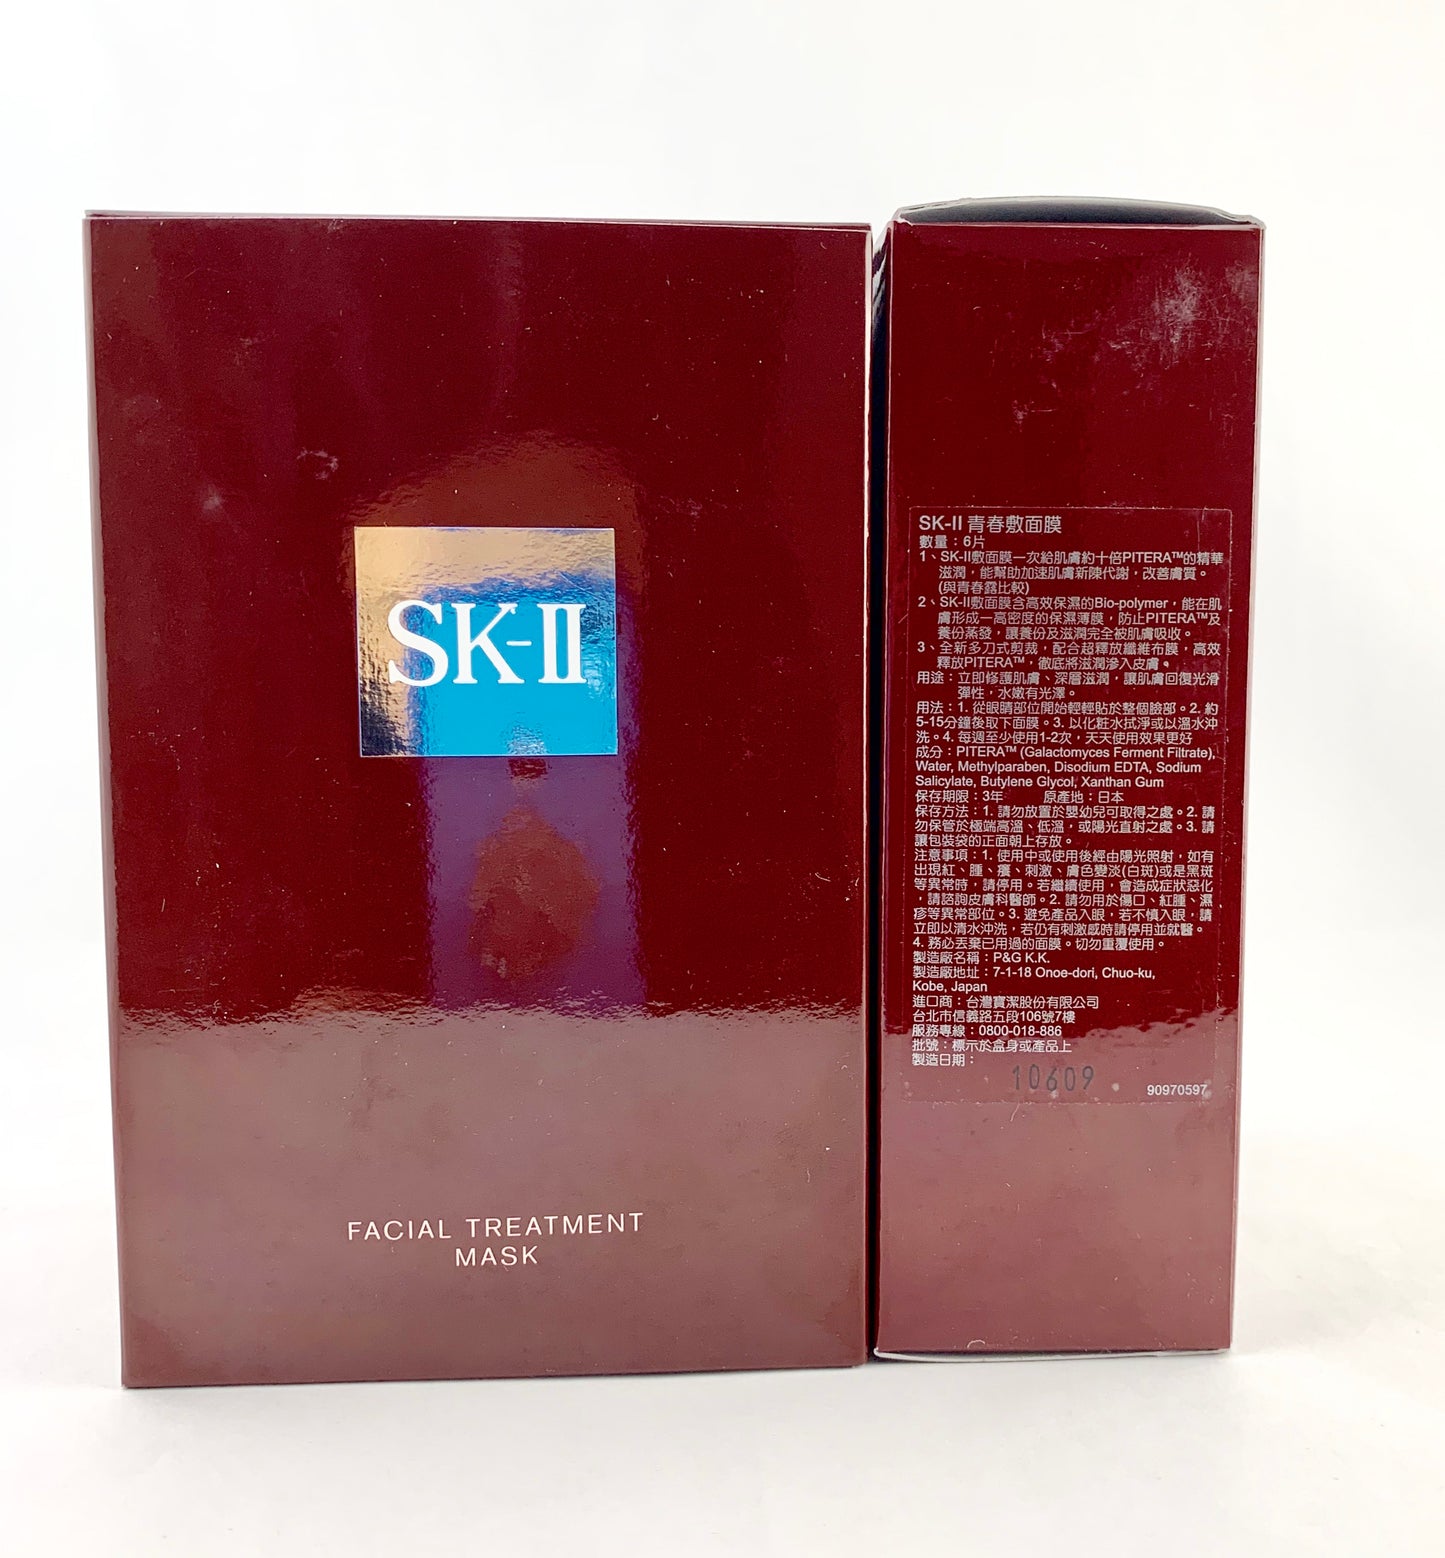 SK-II Facial Treatment Mask 6pcs (Full Box).